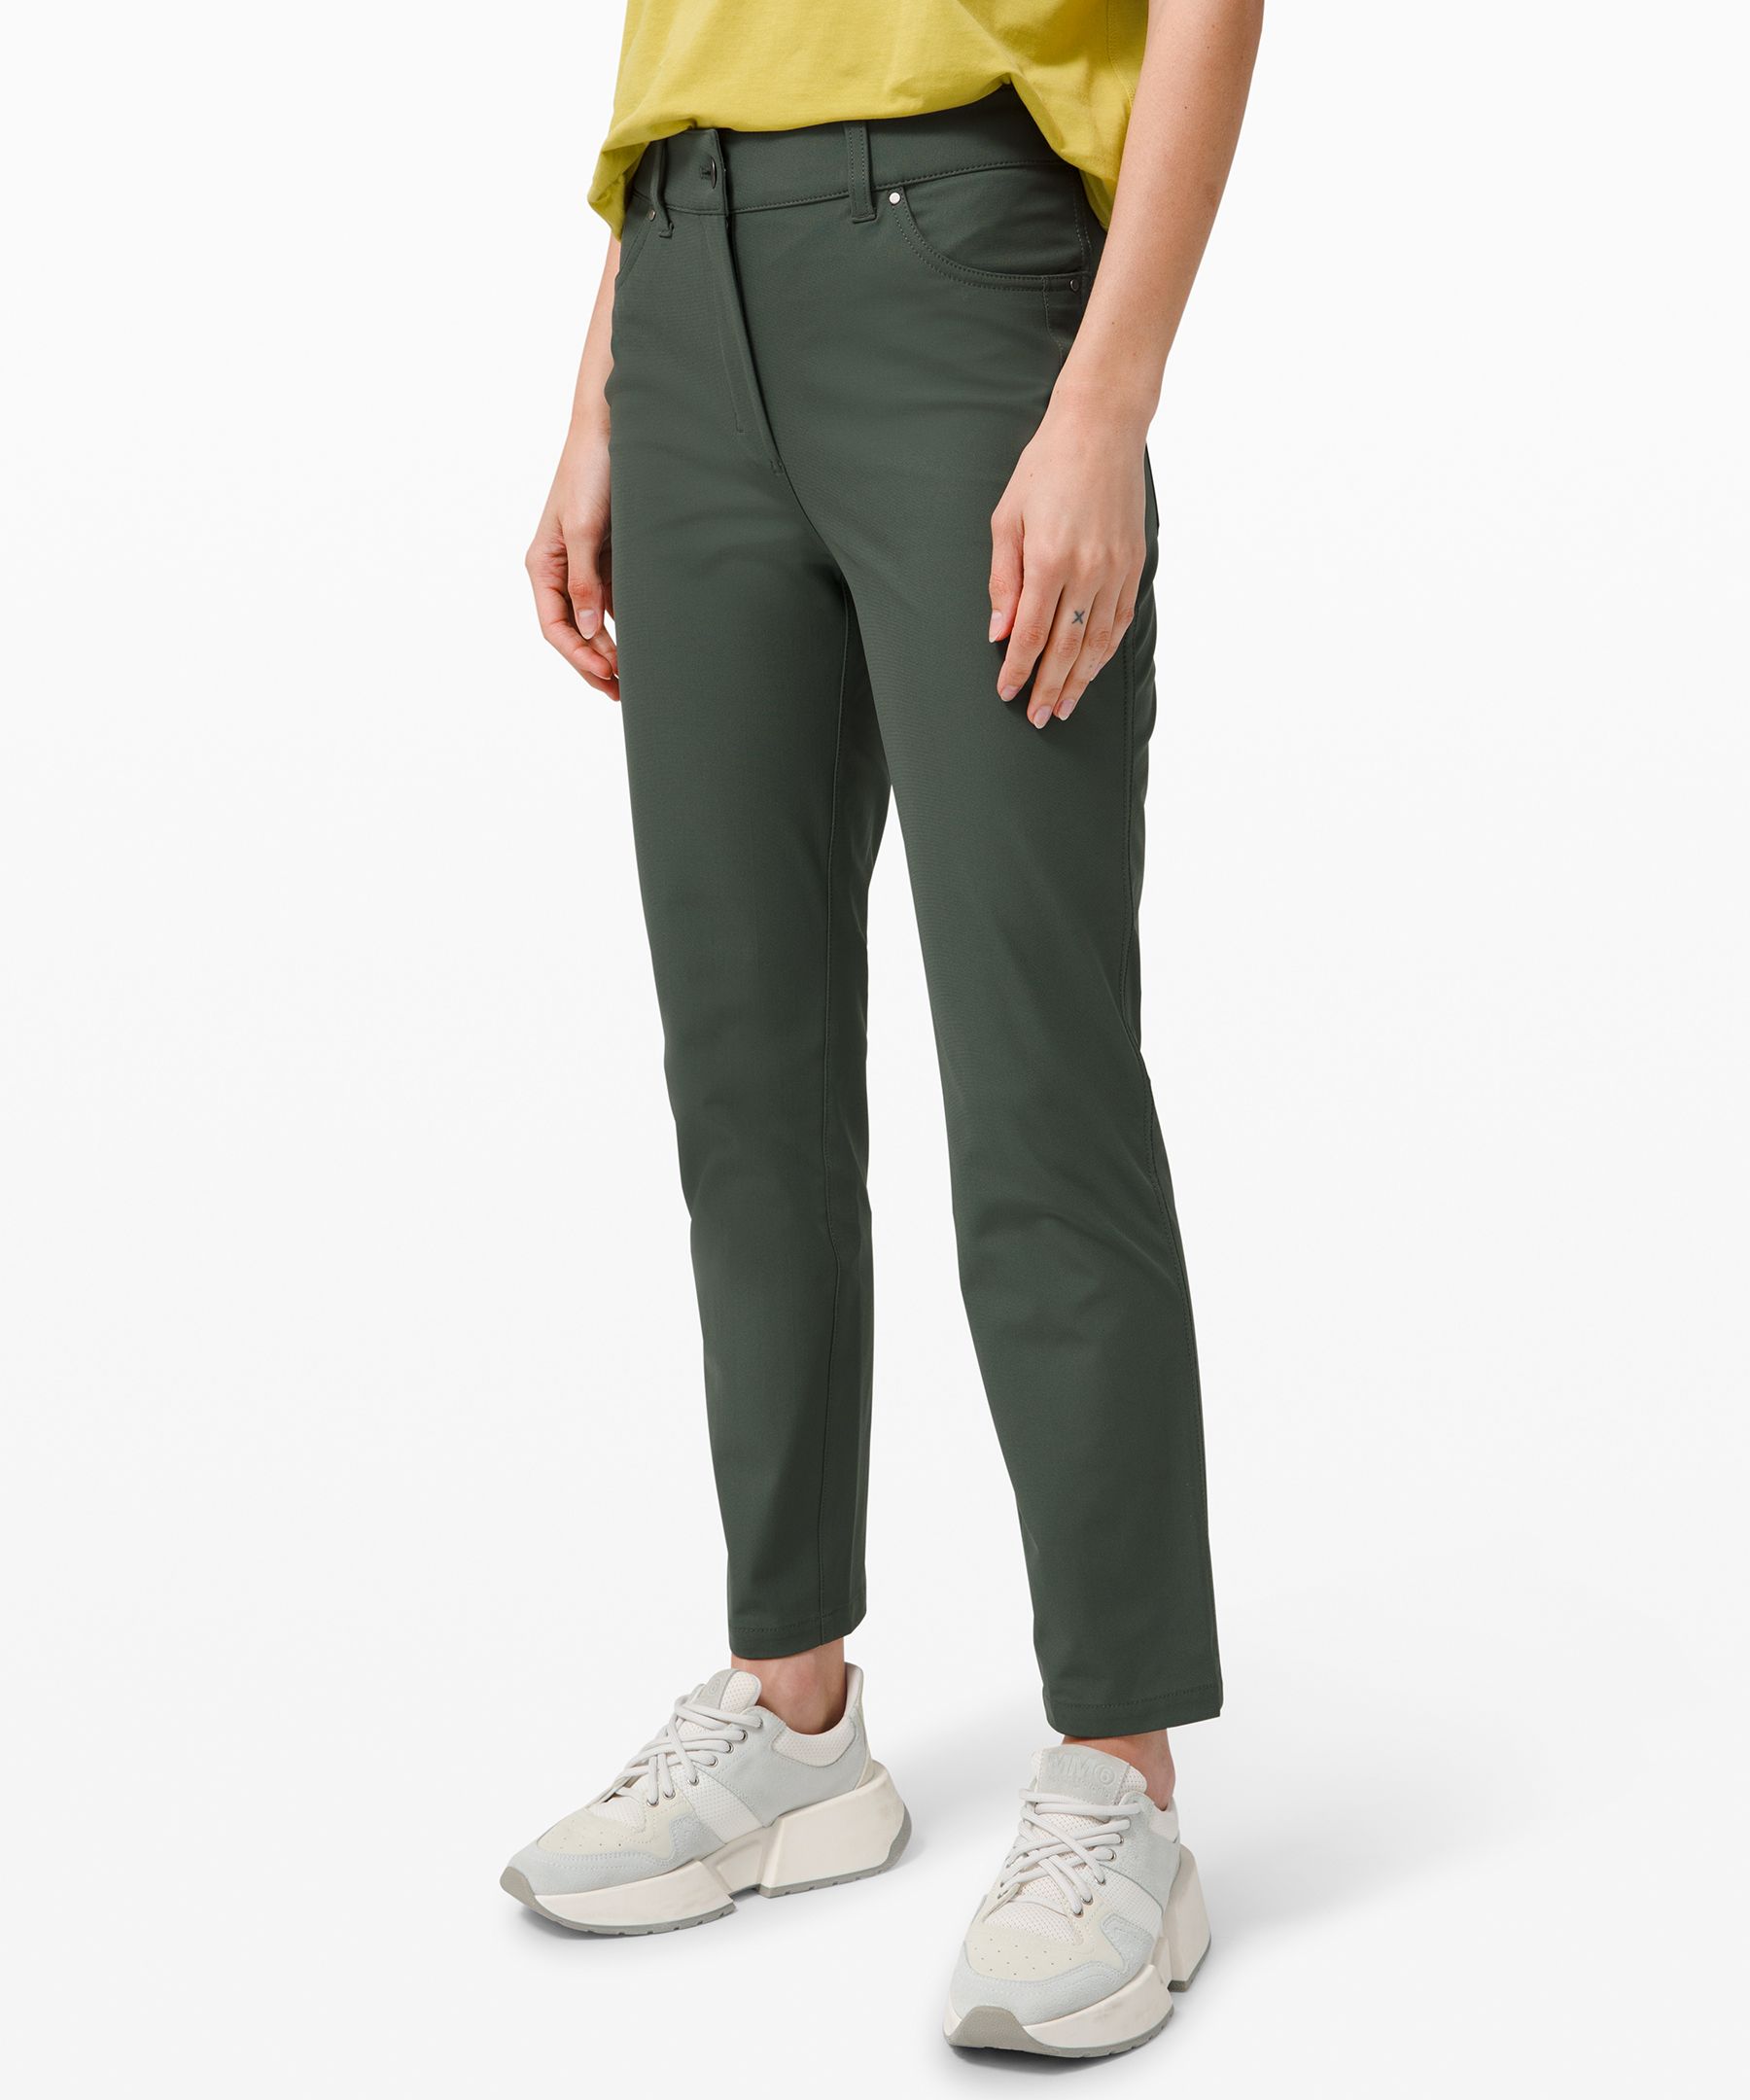 Lululemon City Sleek 5 Pocket 7/8 Pant In Green